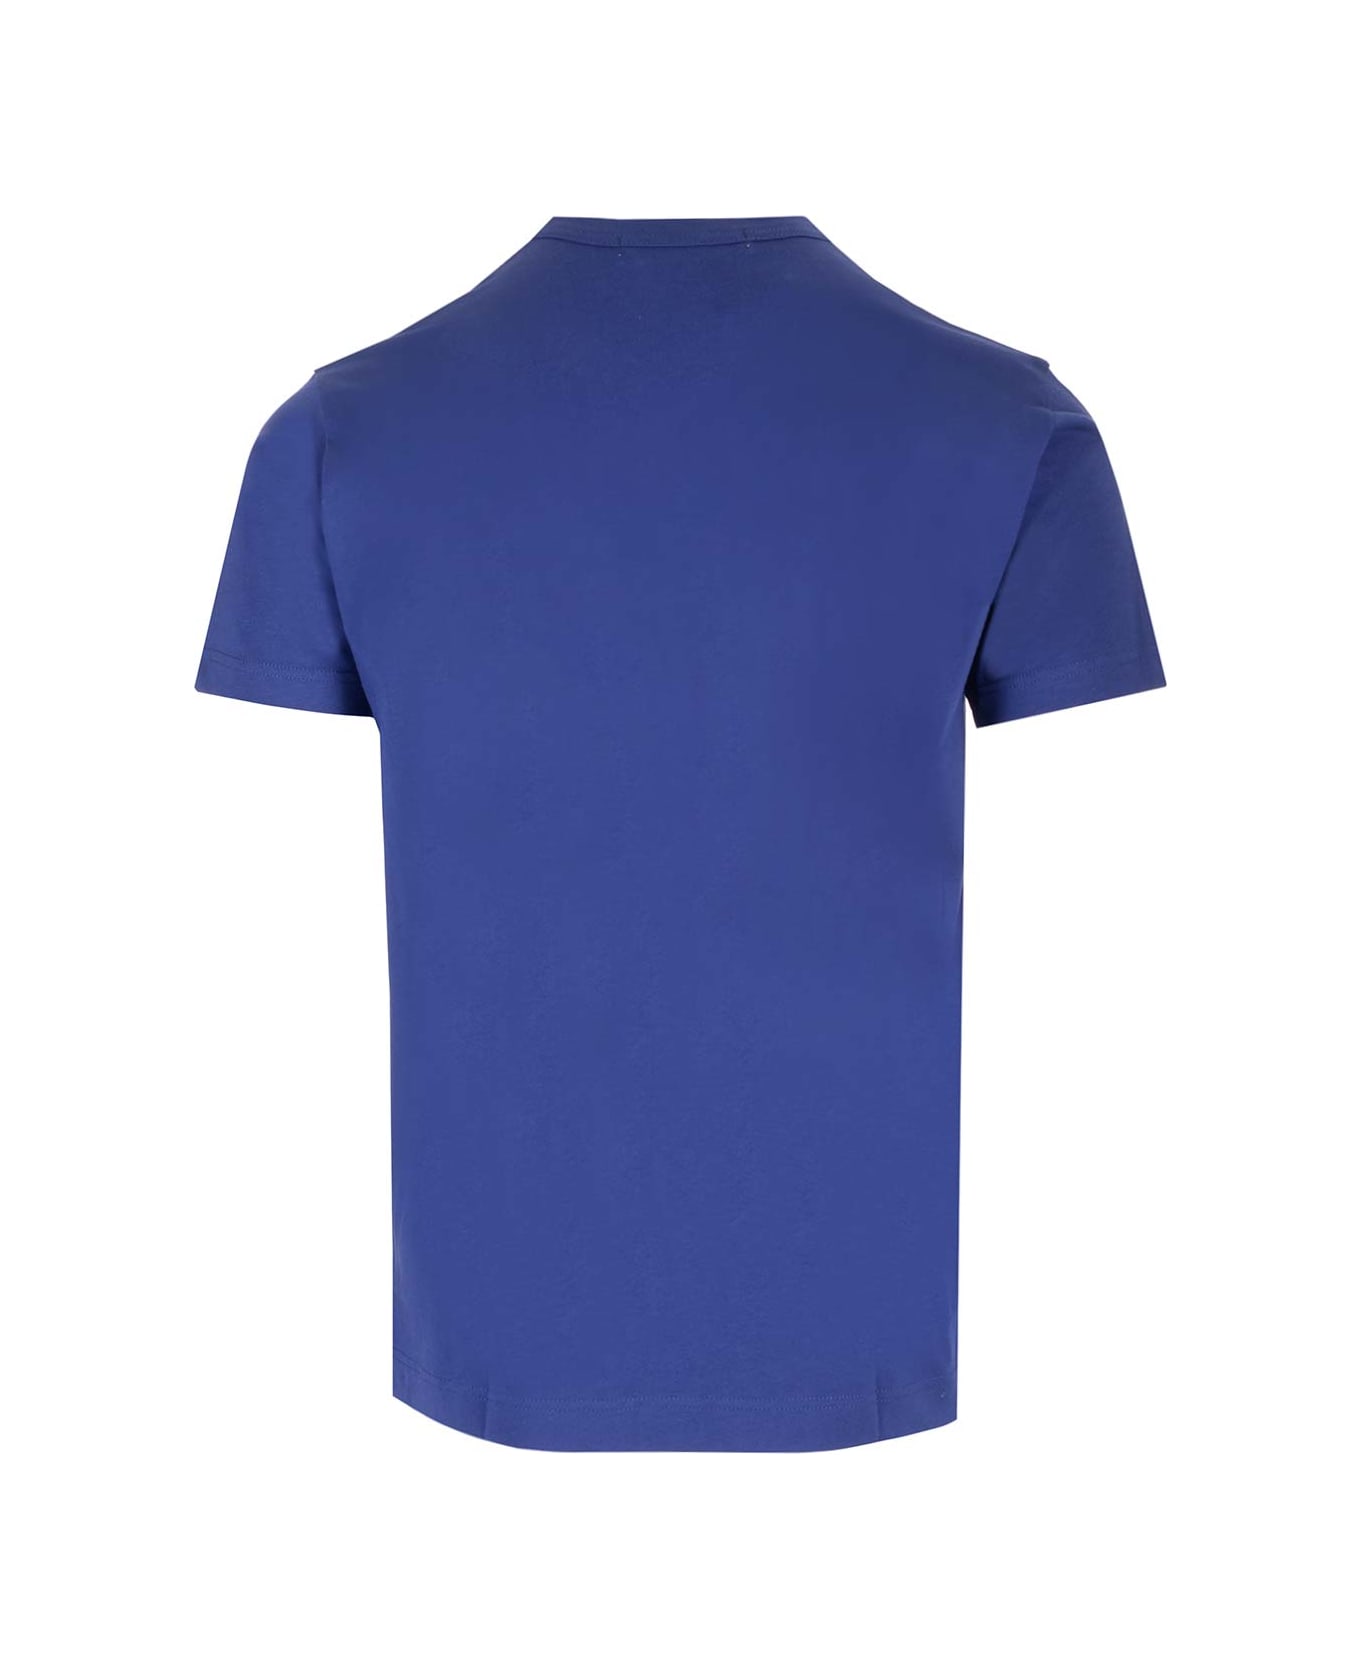 Comme des Garçons Shirt Electric Blue Slim T-shirt - NAVY